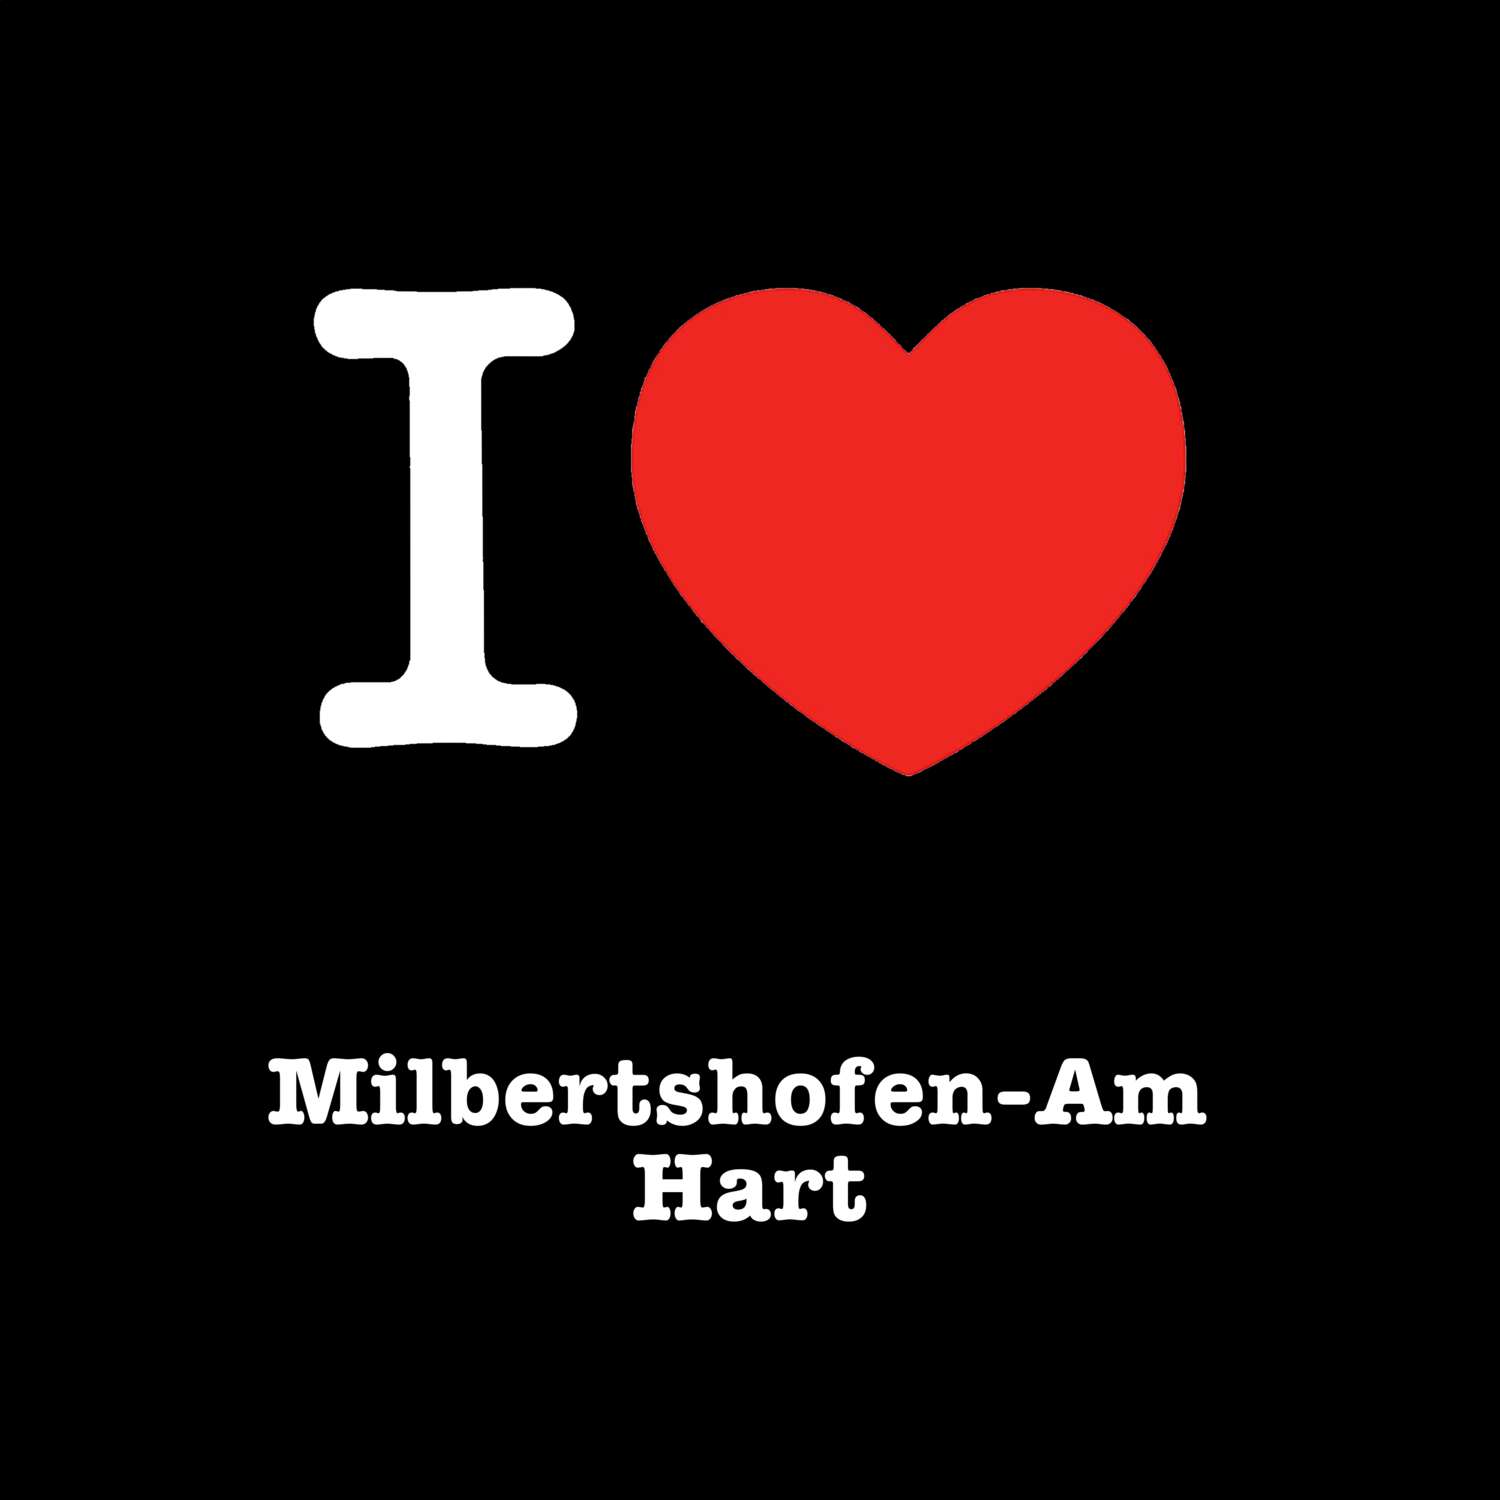 Milbertshofen-Am Hart T-Shirt »I love«